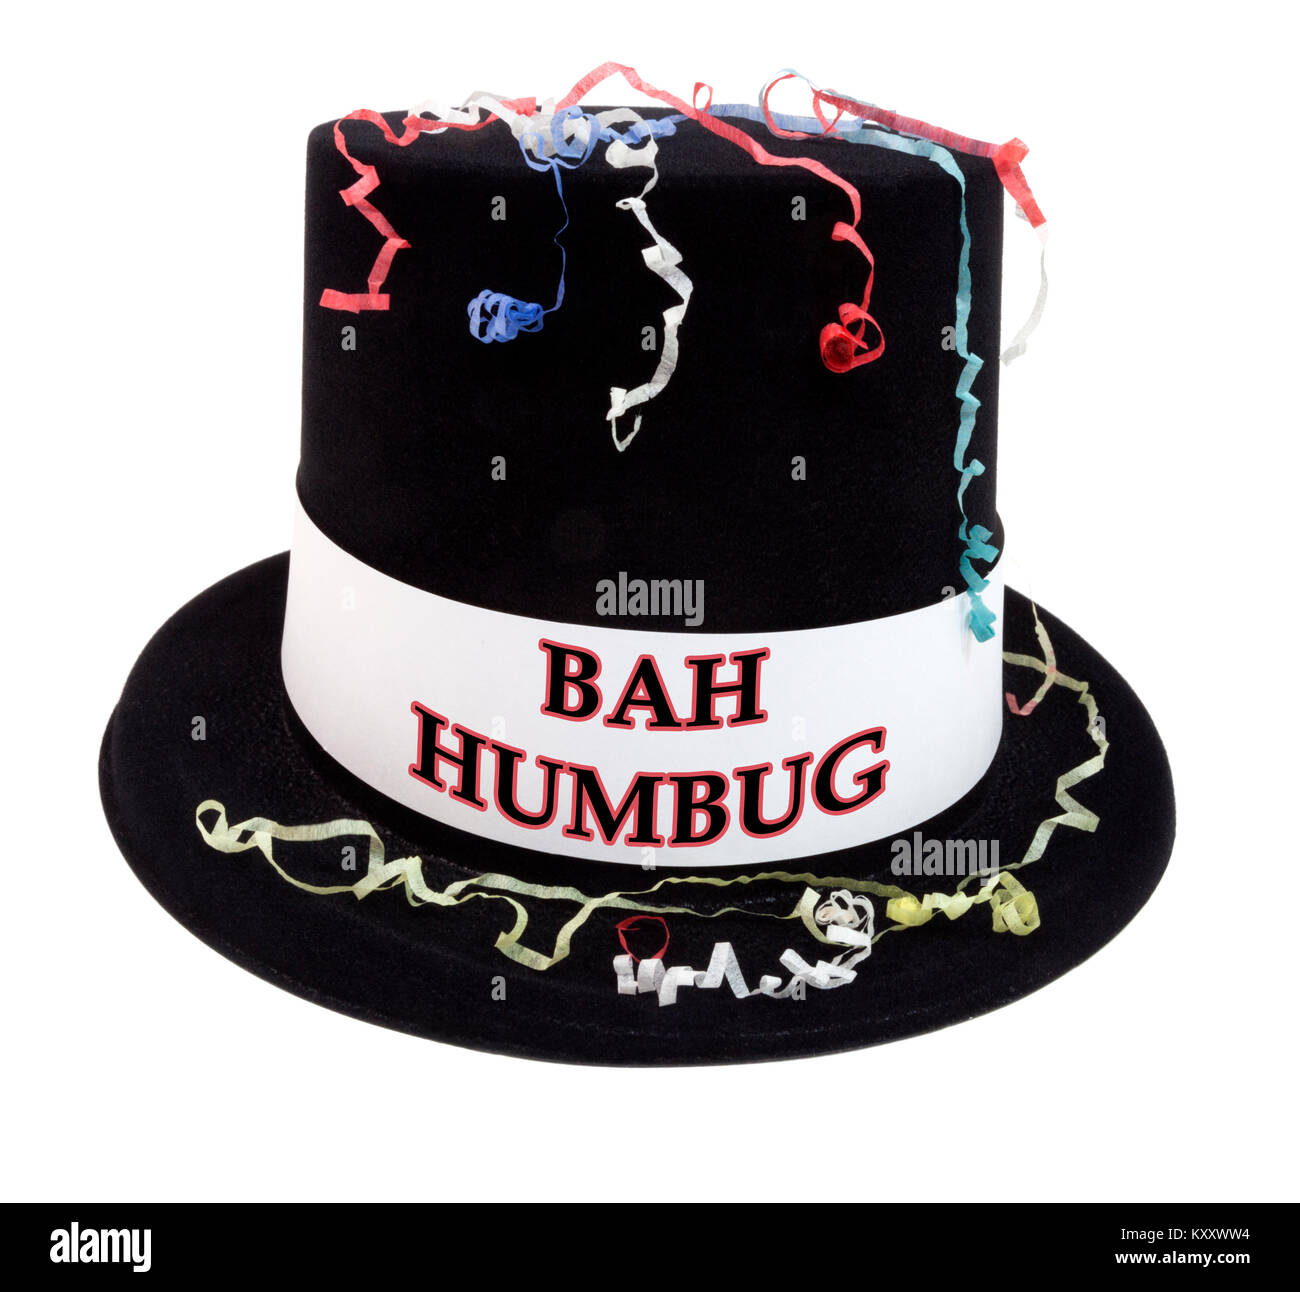 BAH HUMBUG kostüm Feier Hut mit Konfetti Streamer. Isoliert. Stockfoto